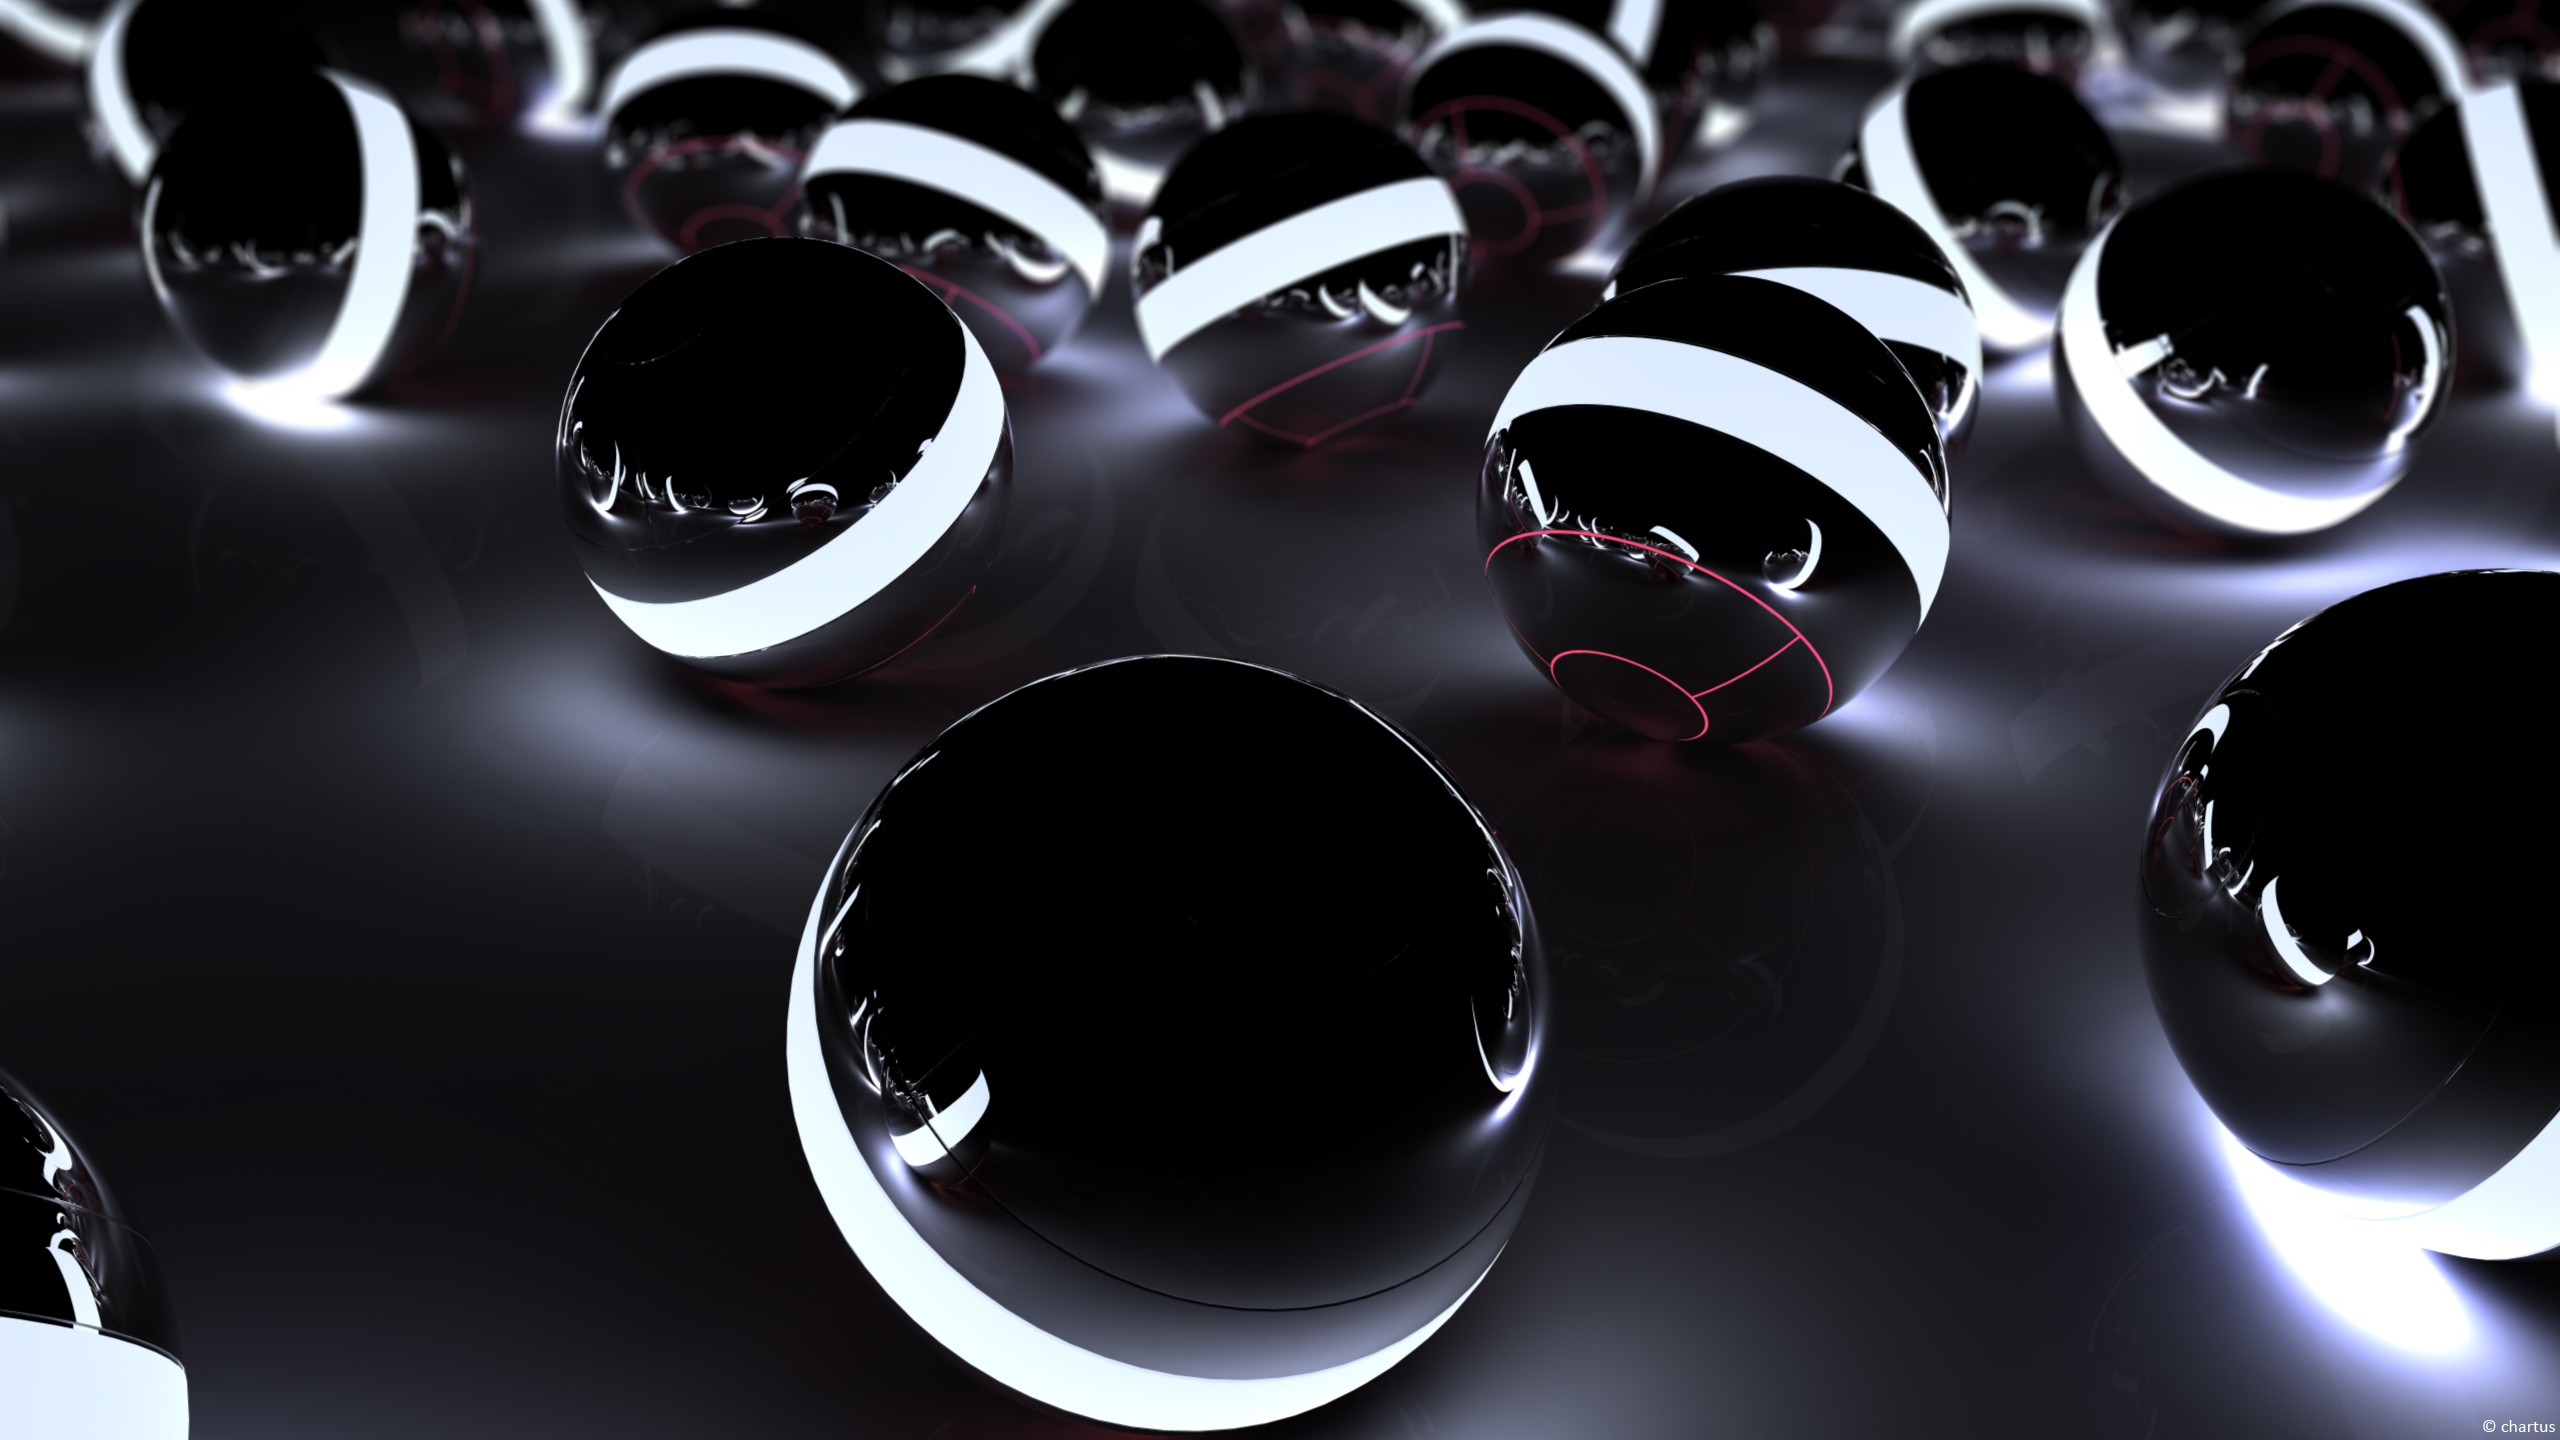 Poke Balls 3D CGi Render Abstract Digital Art Ball Sphere 2560x1440